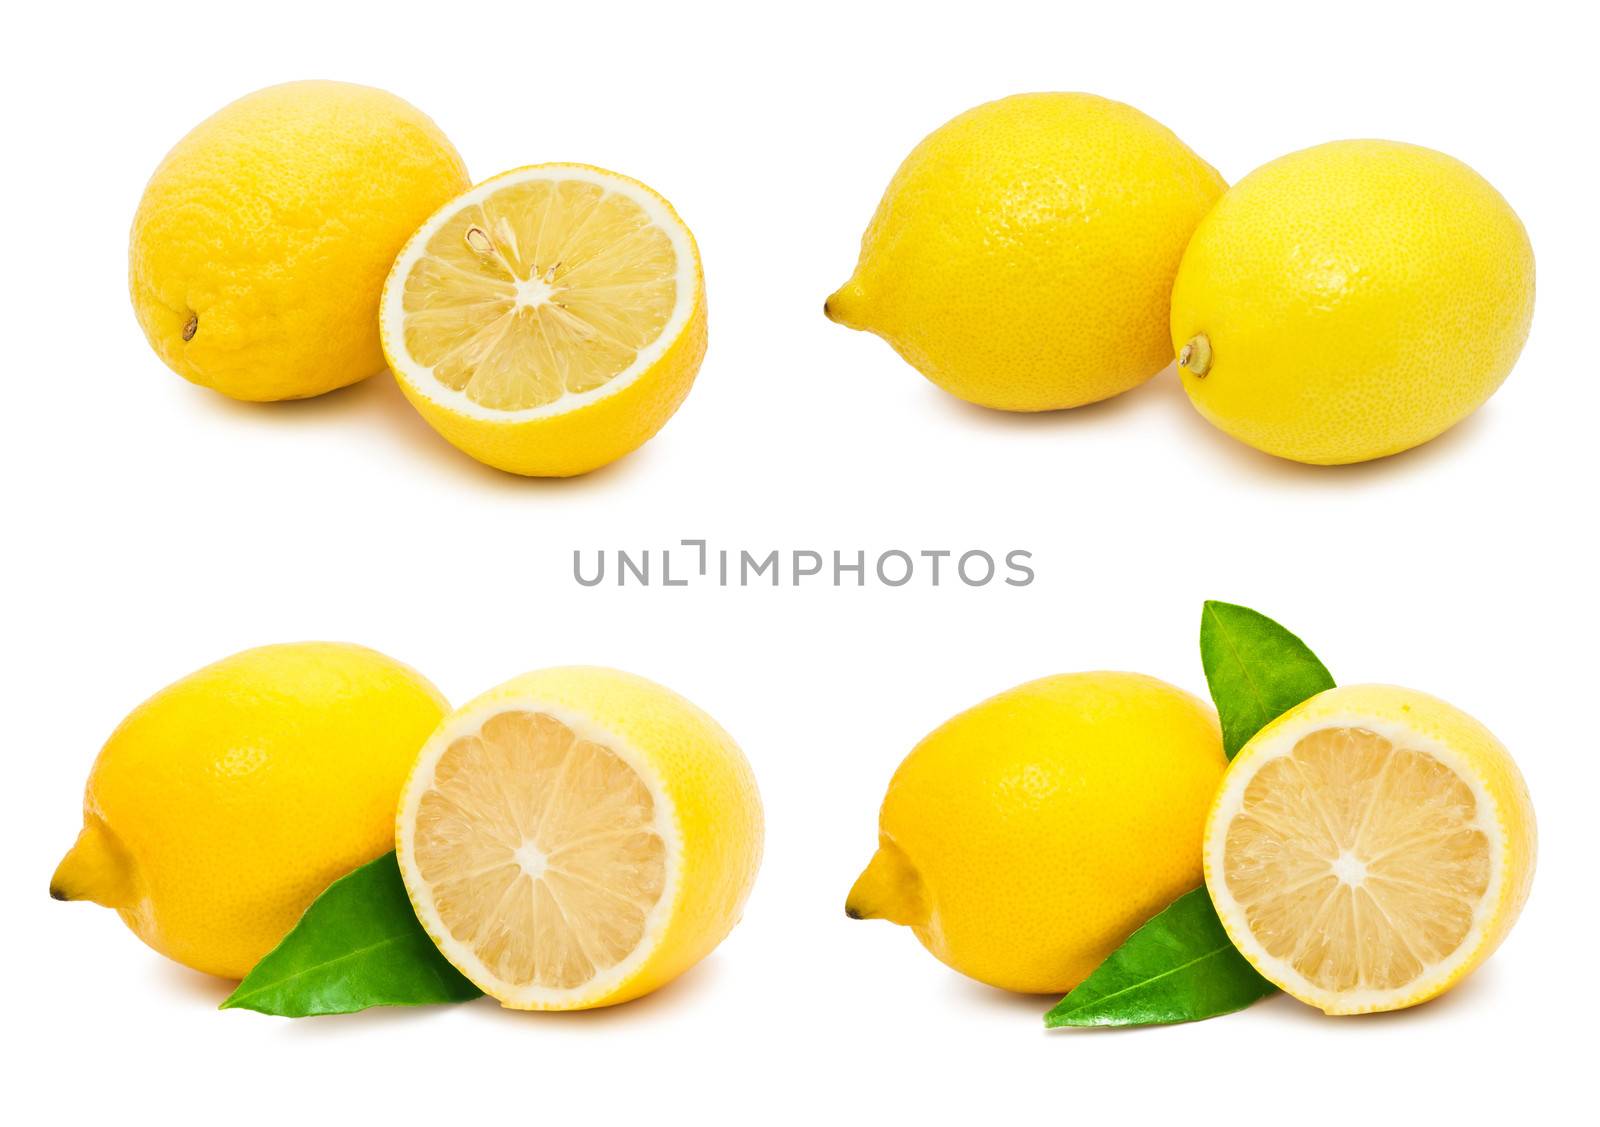 Collection of fresh tasty lemons isolated on white background